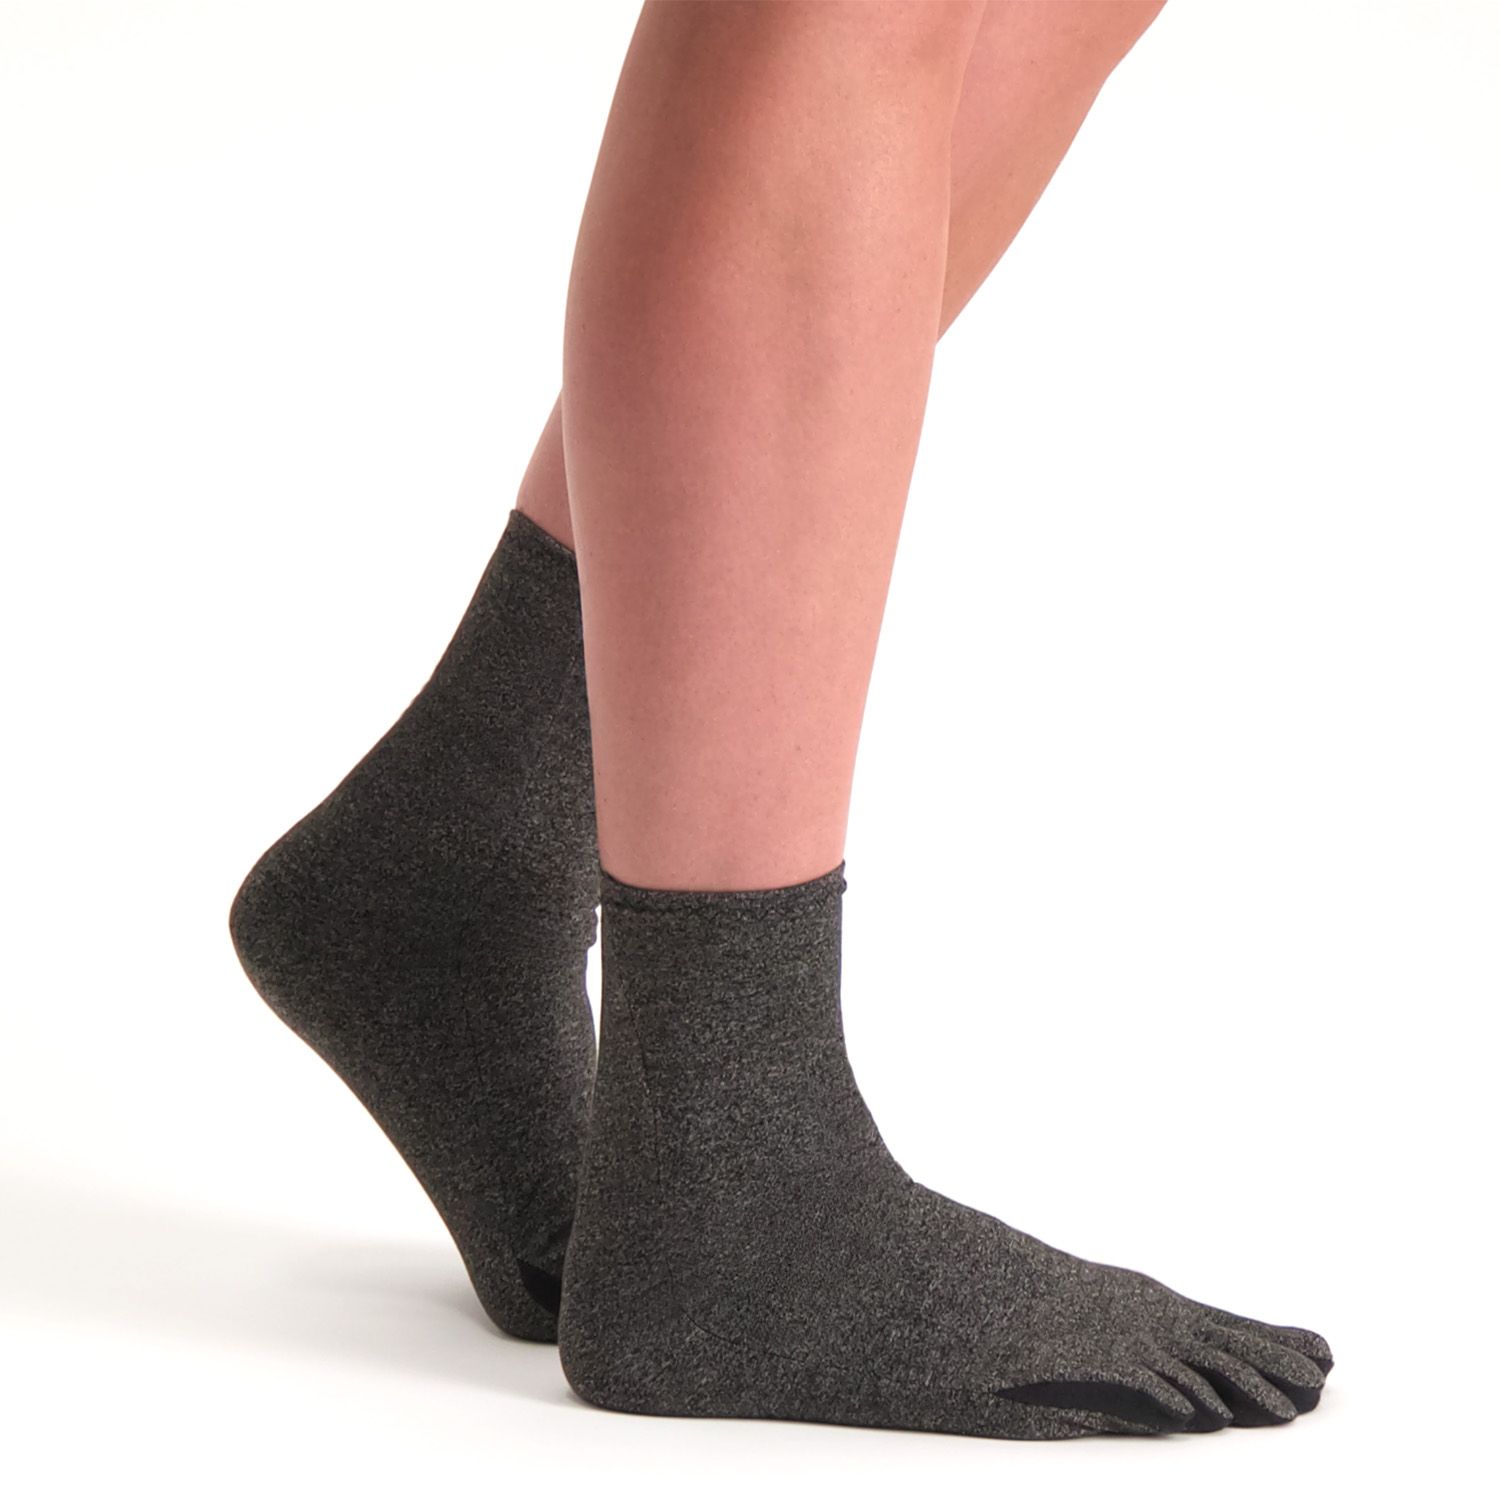 Buy Arthritis Compression Socks online